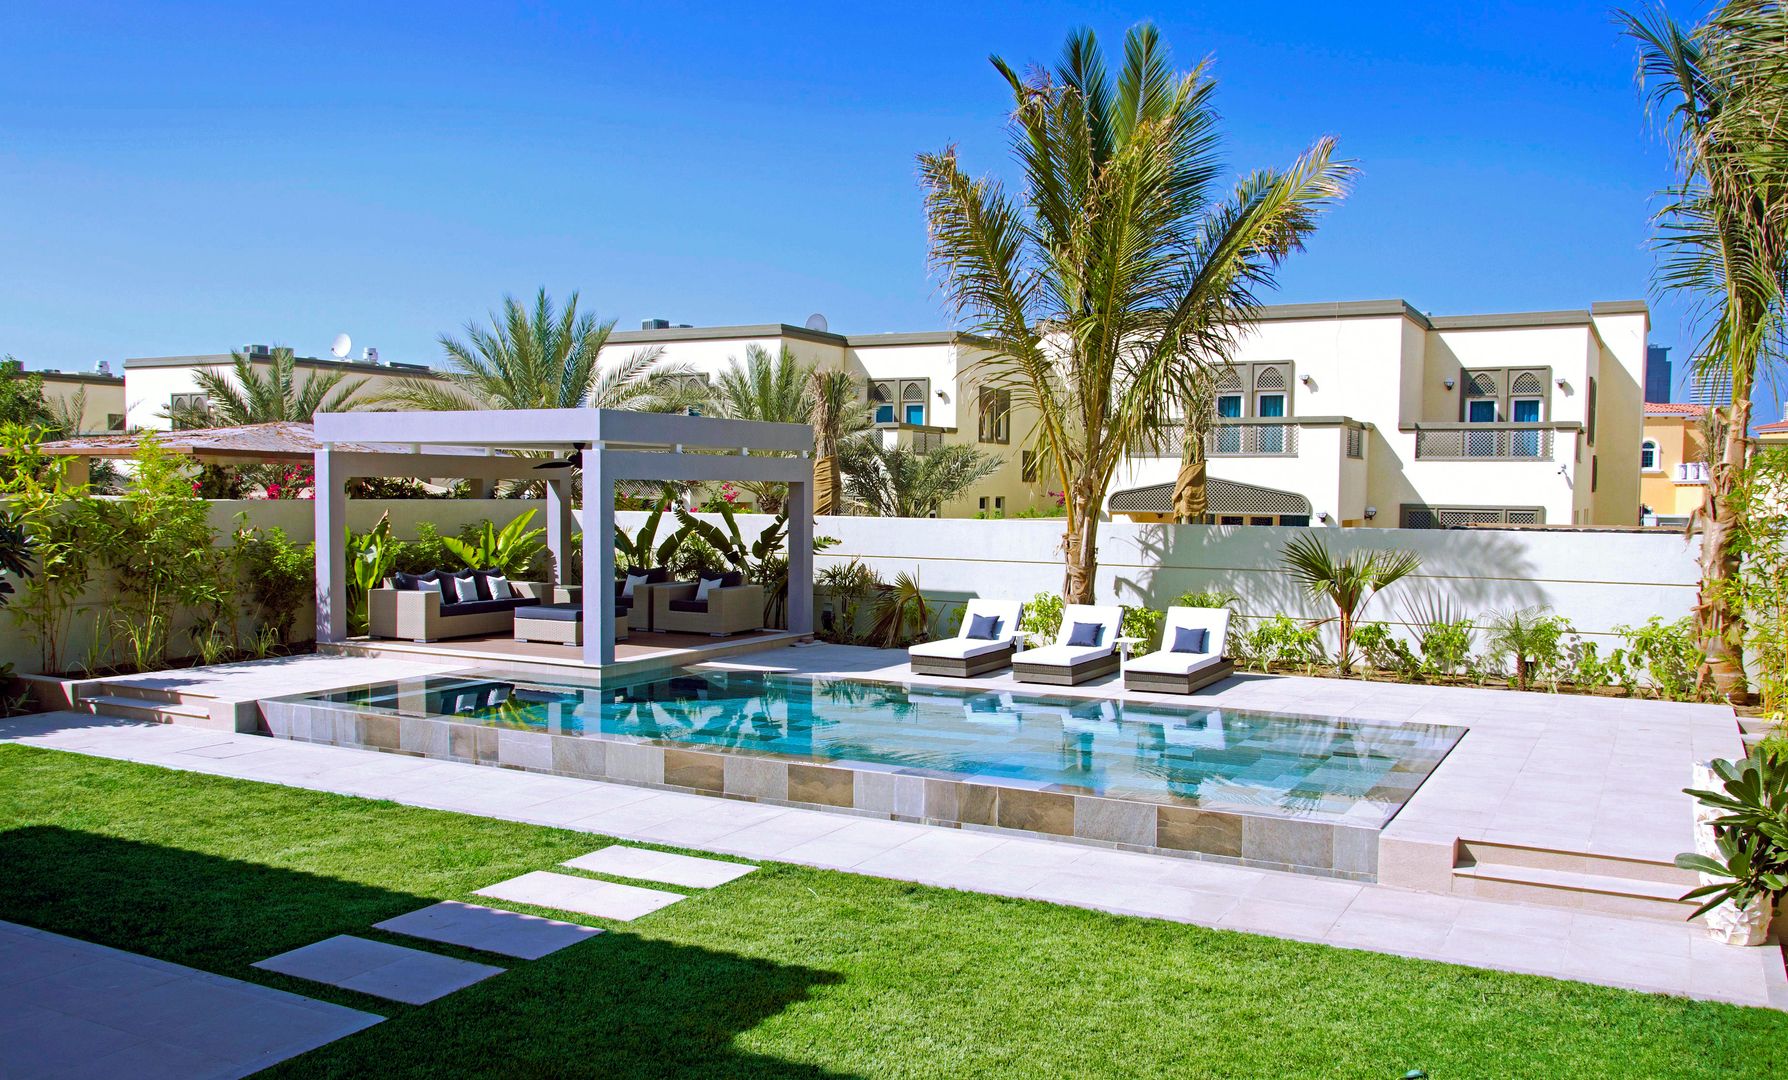 Infinity pool in Italian porcelain tiles Xterior Landscaping and Pools 泳池 swimming pool Dubai,landscape,design